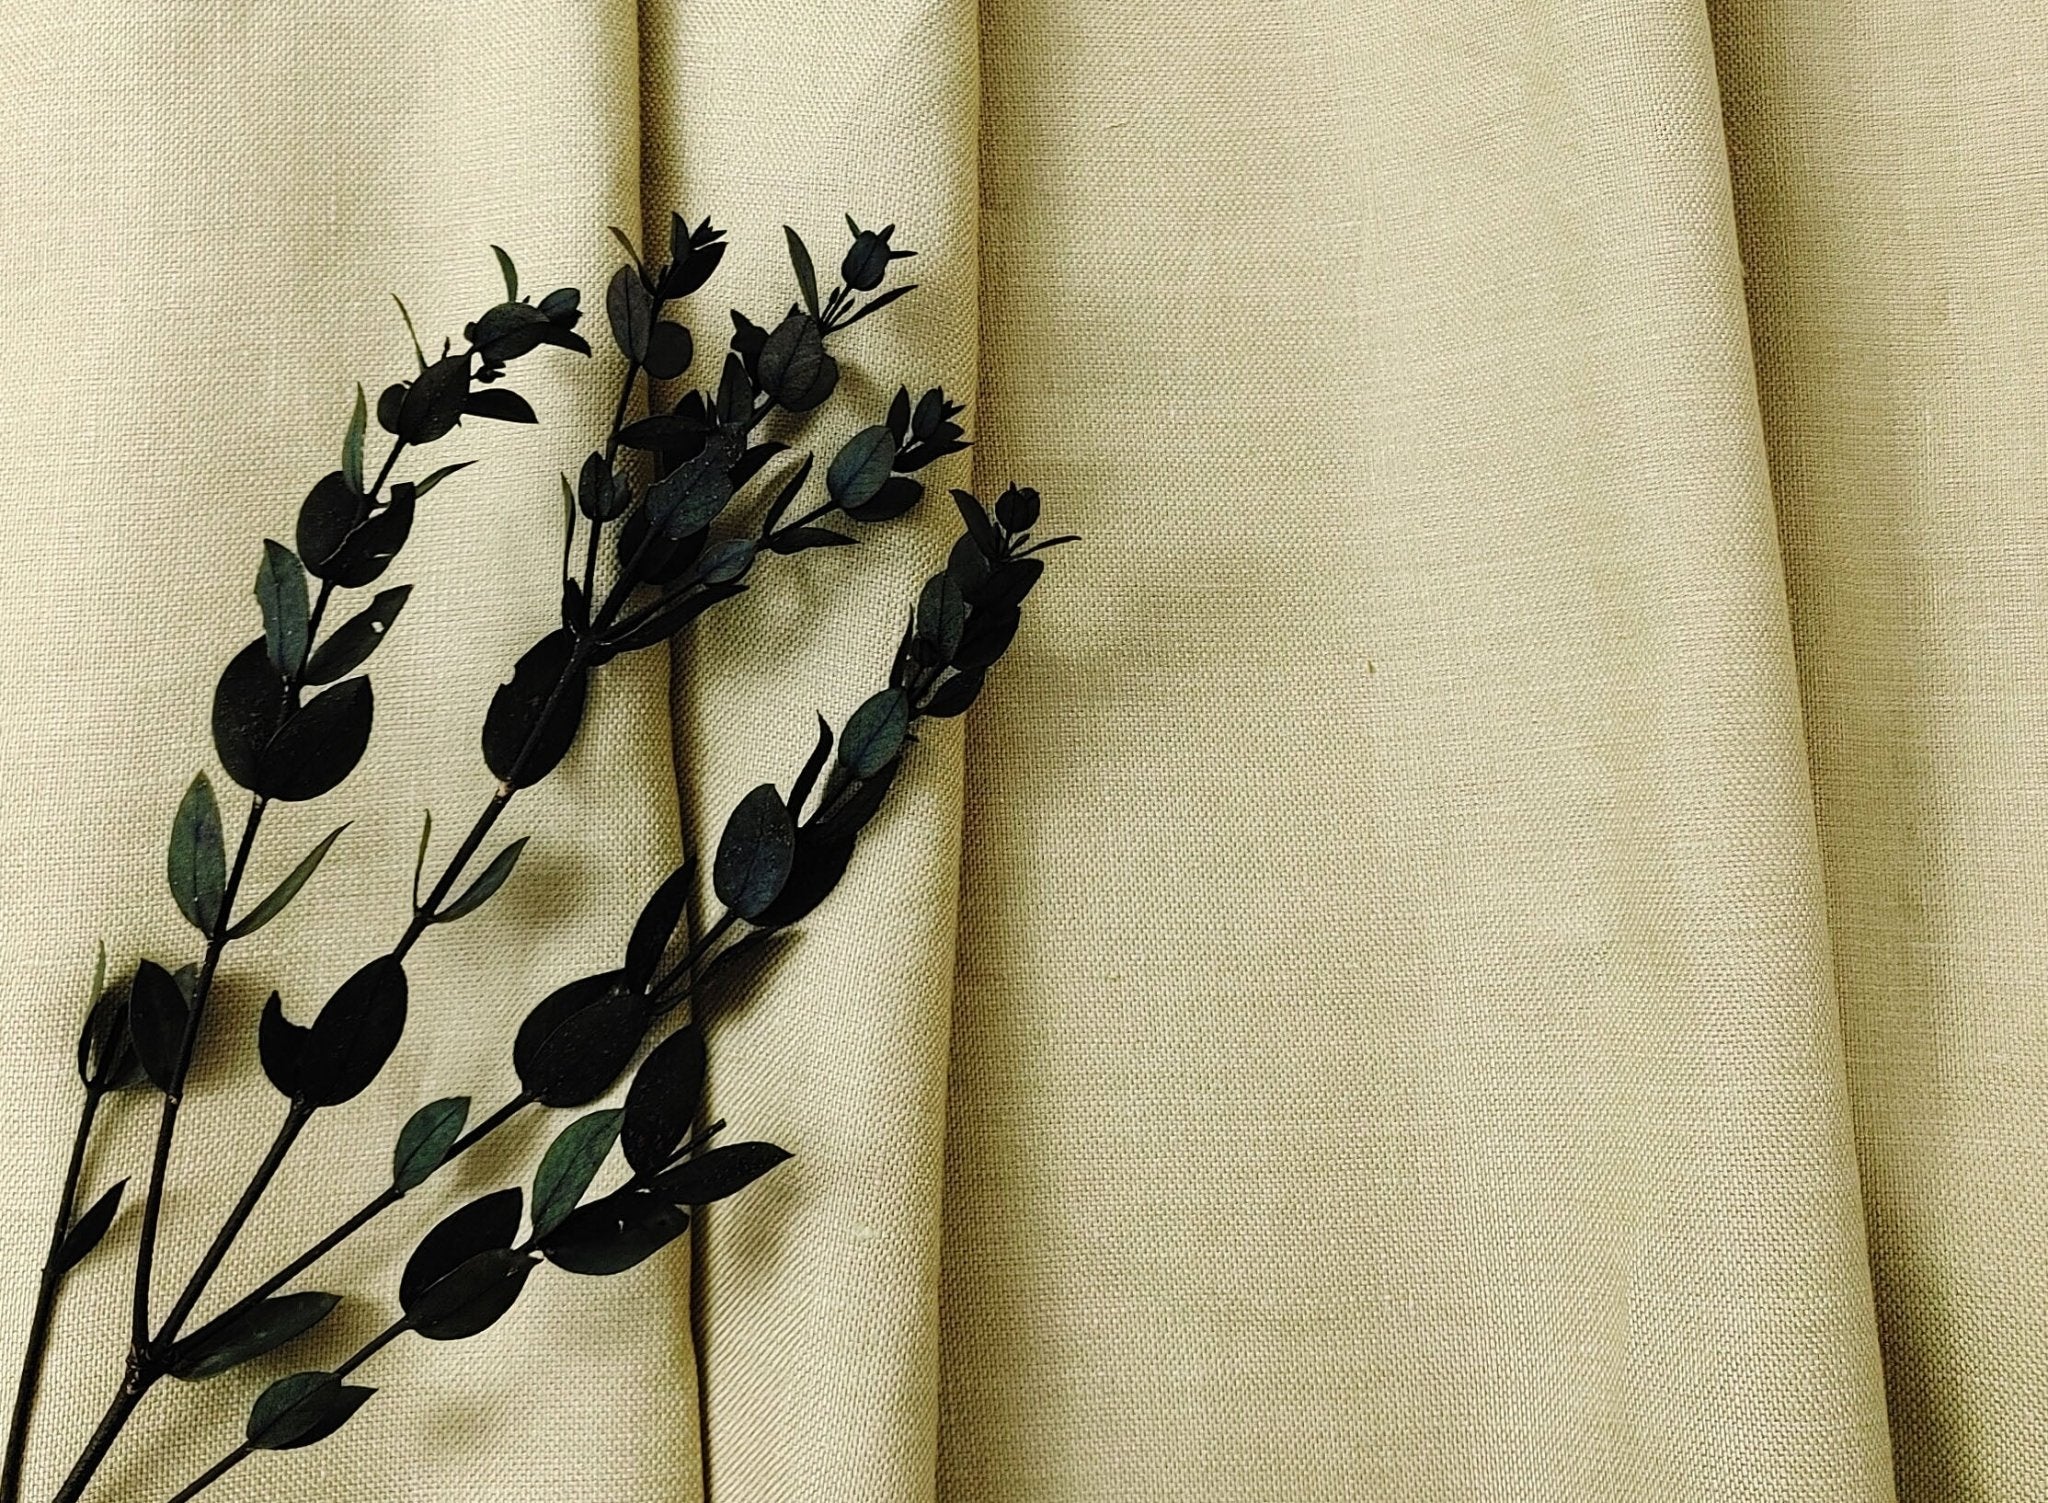 100% Linen Canvas Chambray Fabric 3455 1702 - The Linen Lab - Beige (greenish)